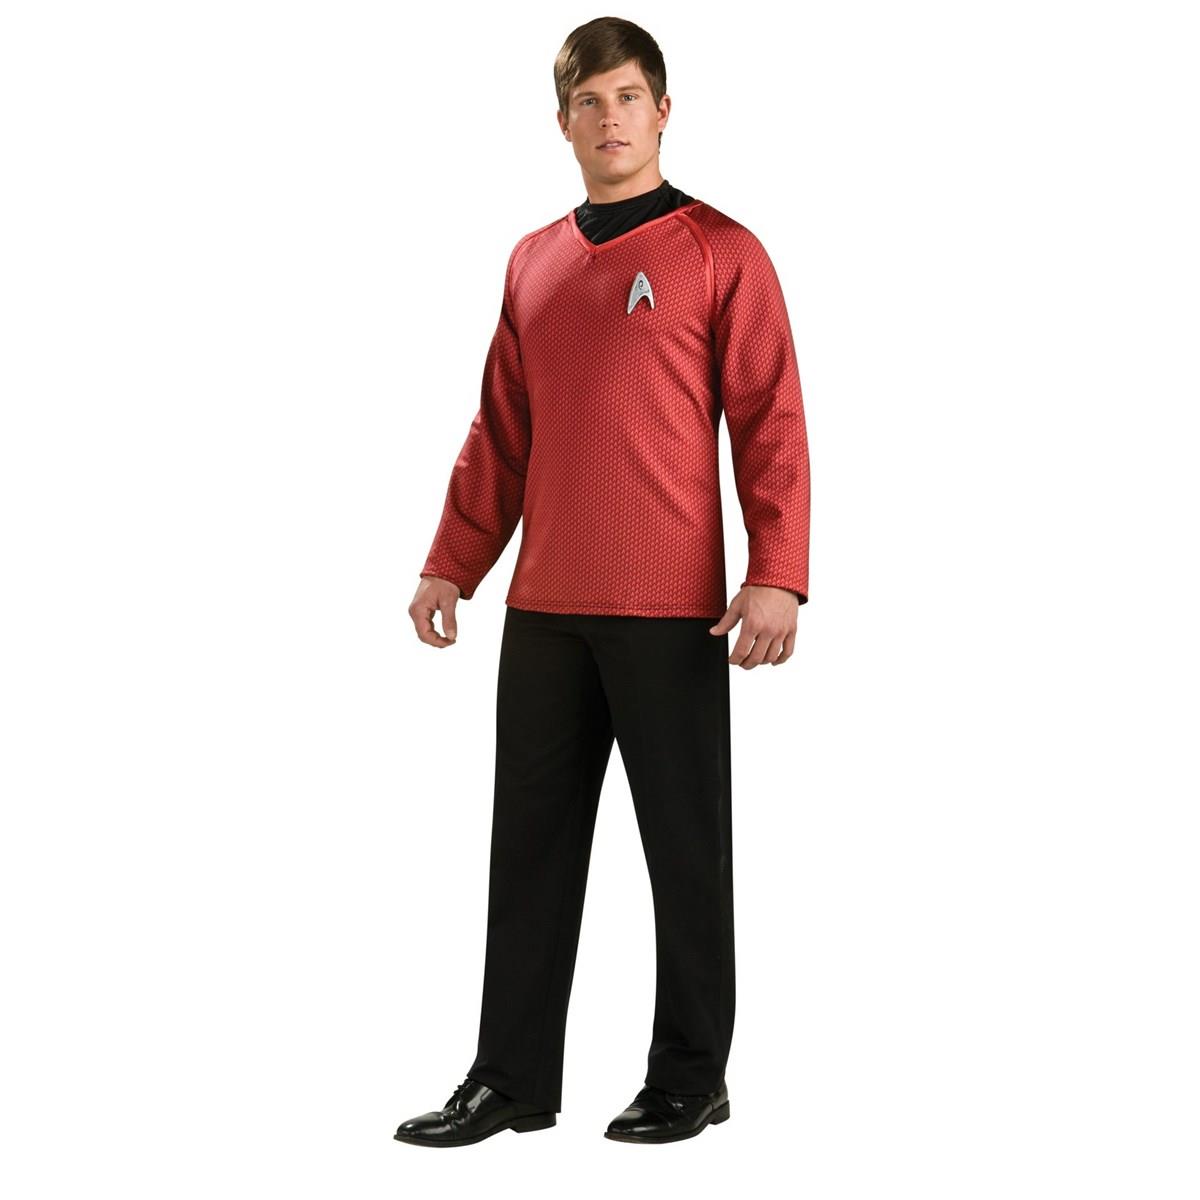 Picture of Rubies Costumes 284409 Halloween Star Trek Mens Grand Heritage Scotty Costume - Medium